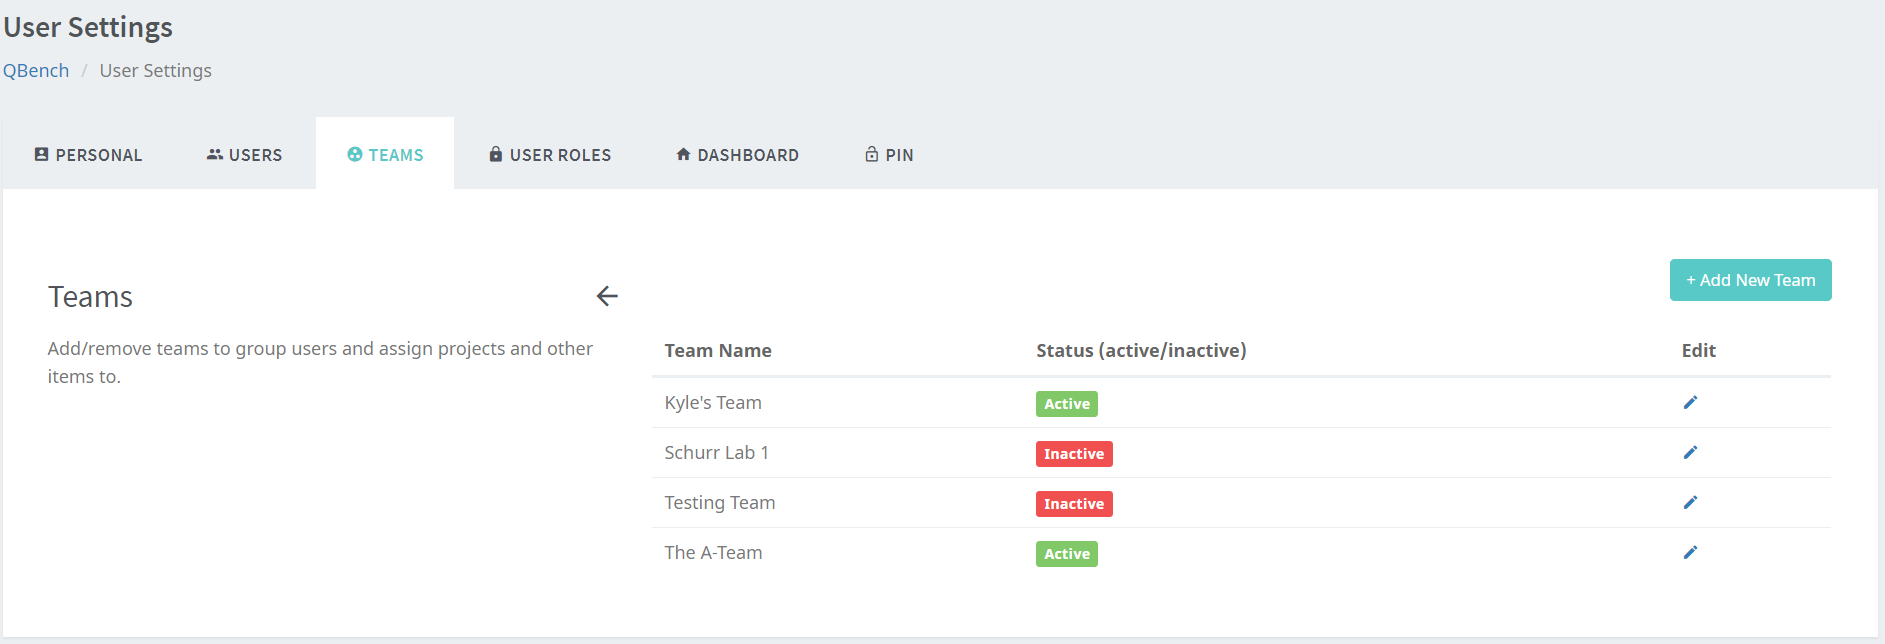 teams_user_settings.PNG